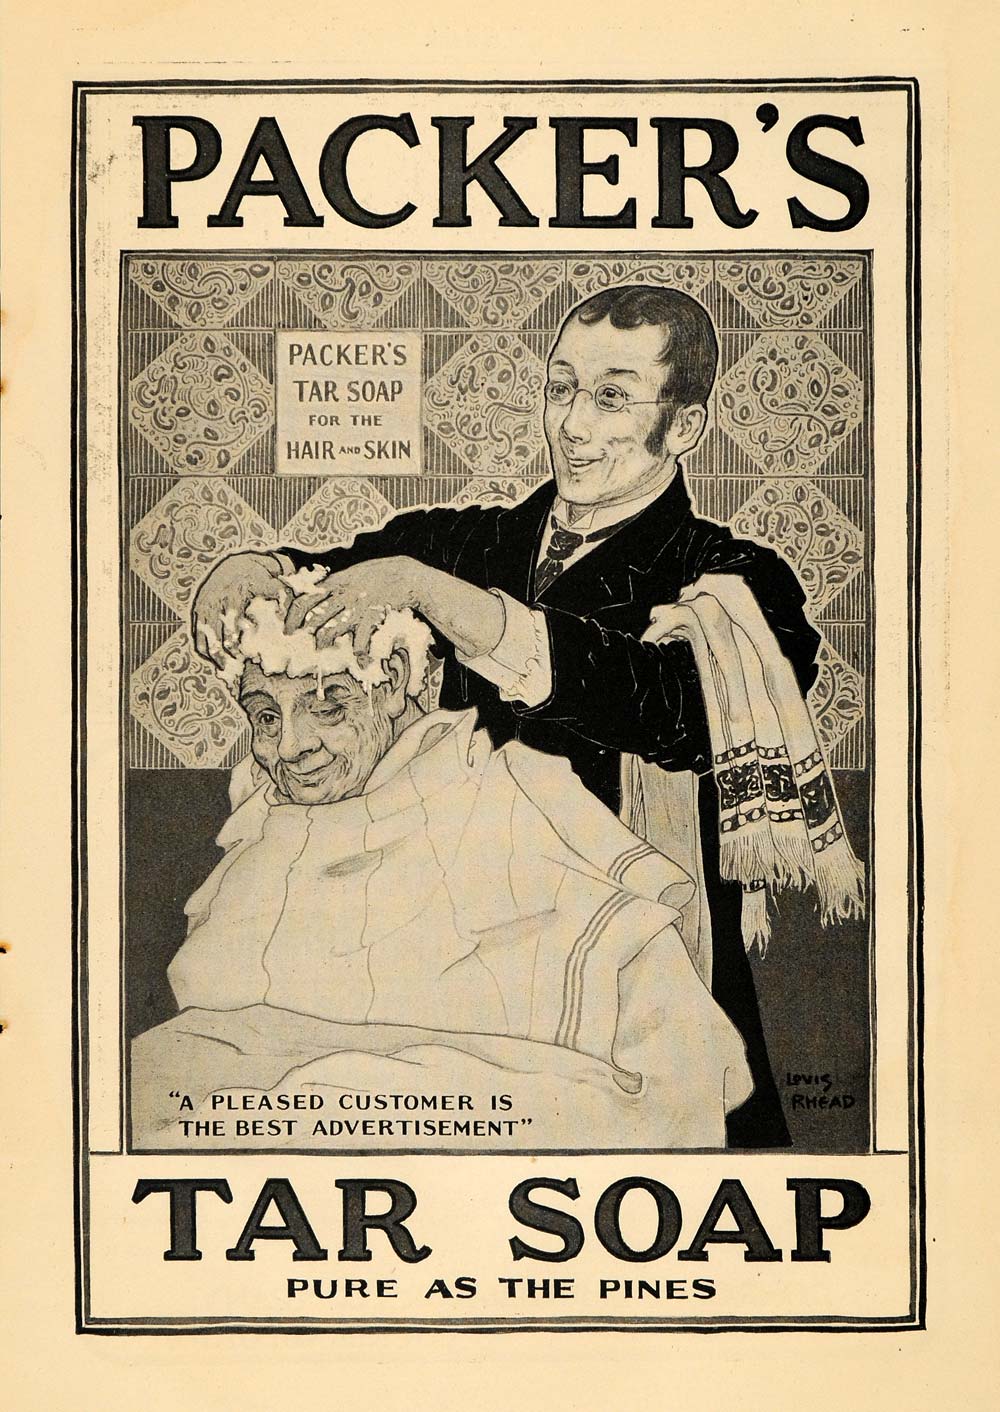 1904 Ad Packer's Tar Soap Hair Skin Washing Pure Pines - ORIGINAL TOM1